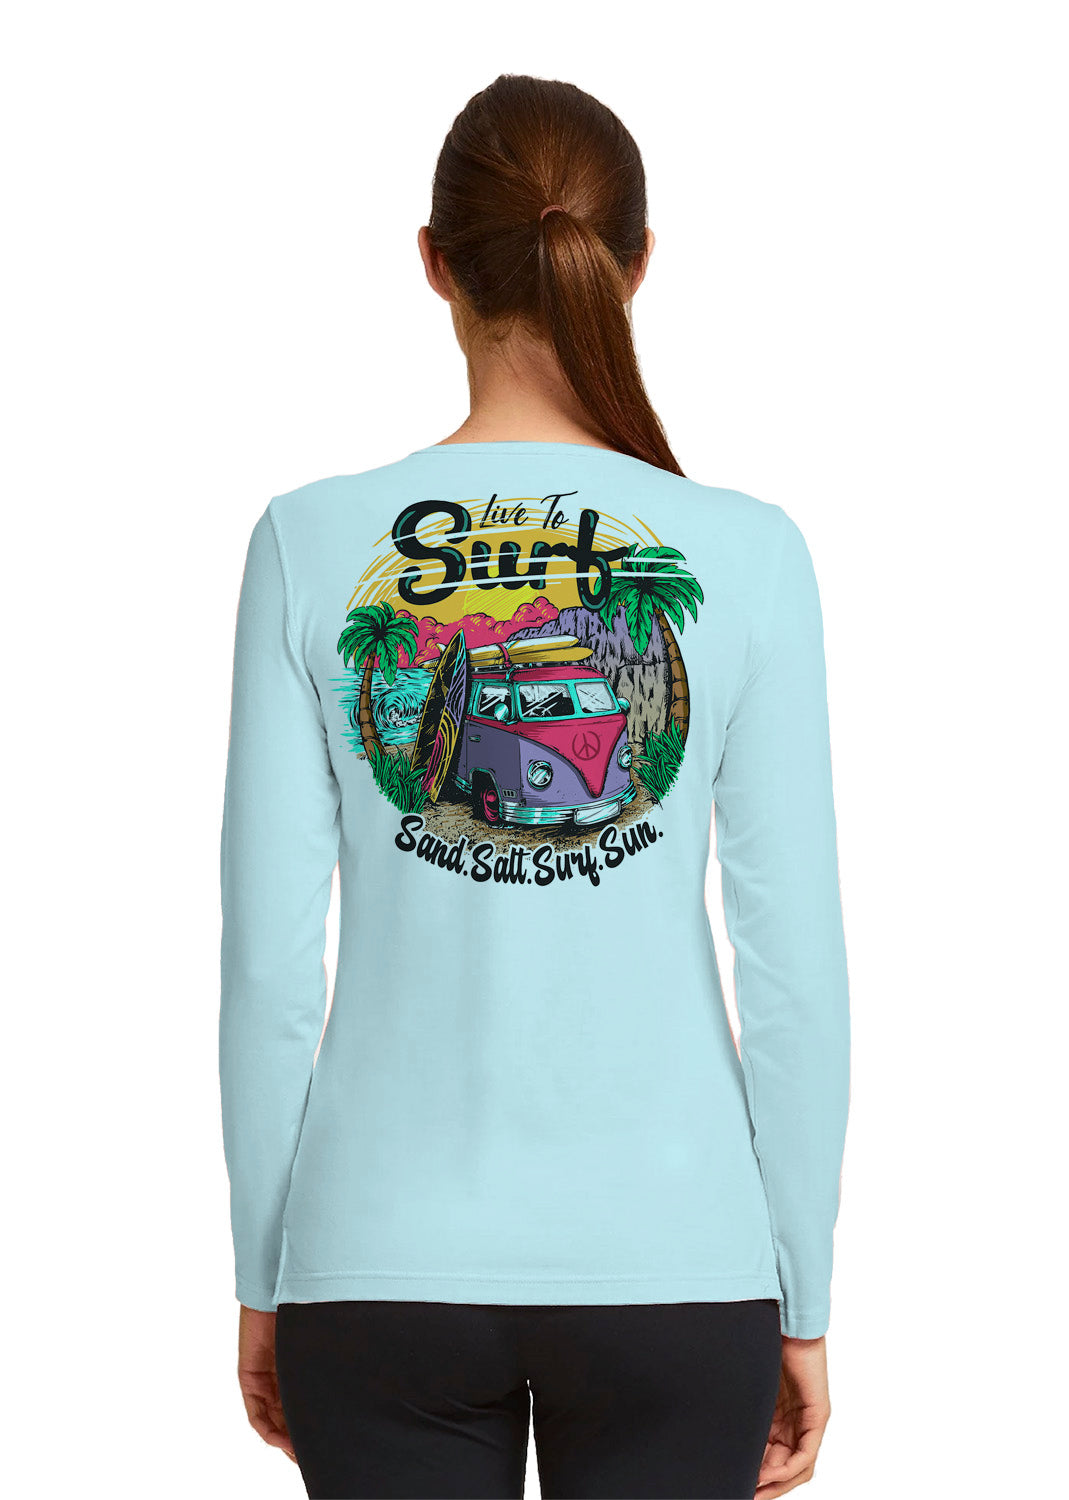 SAND.SALT.SURF.SUN. Tiki Girl Men's UPF 50+ UV Sun Protection Performance Long Sleeve T-Shirt Large / Arctic Blue